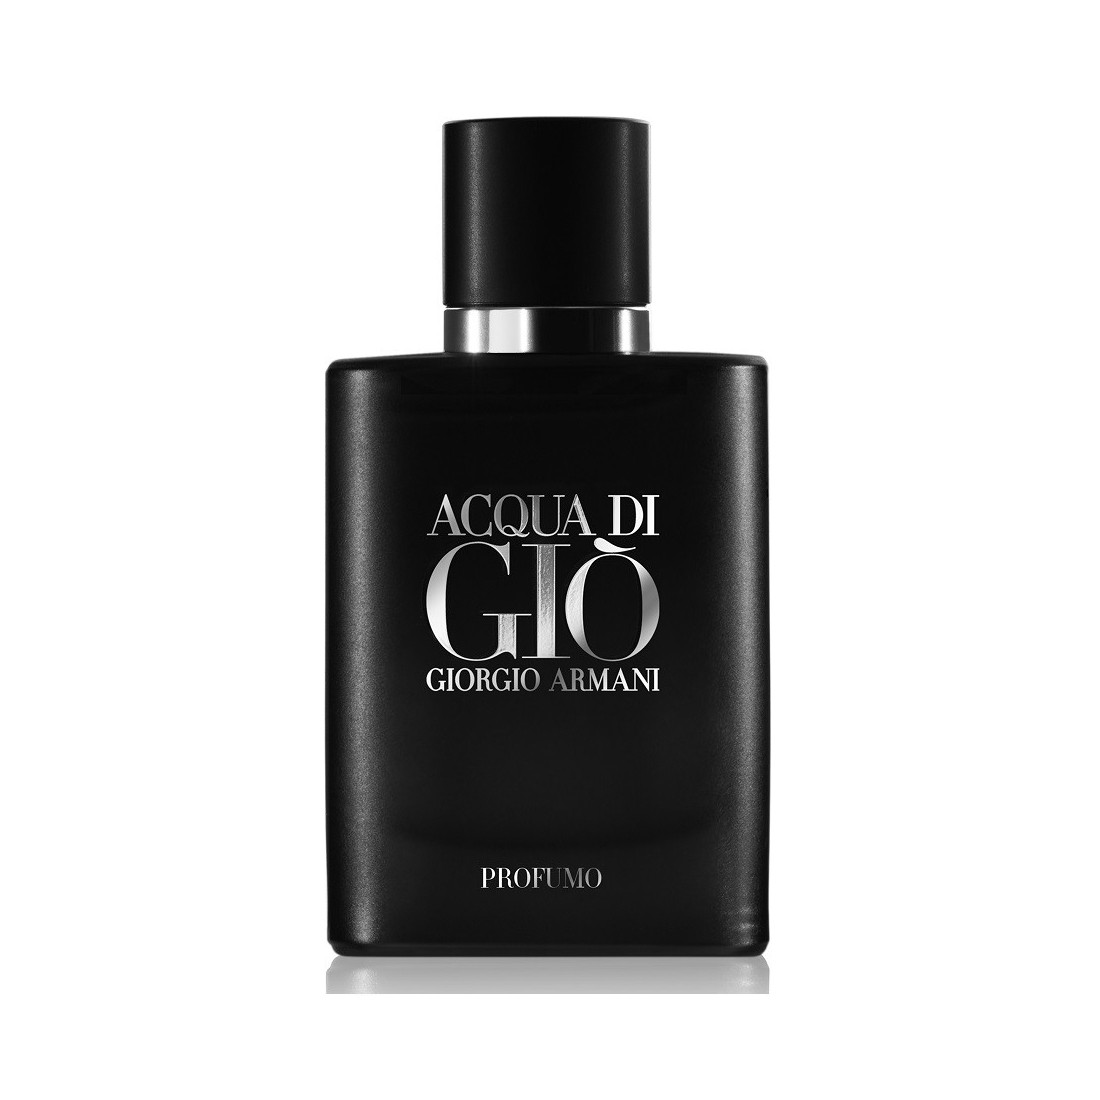 Giorgio Armani Perfume - A Brand New Perfume - BusinessTimes